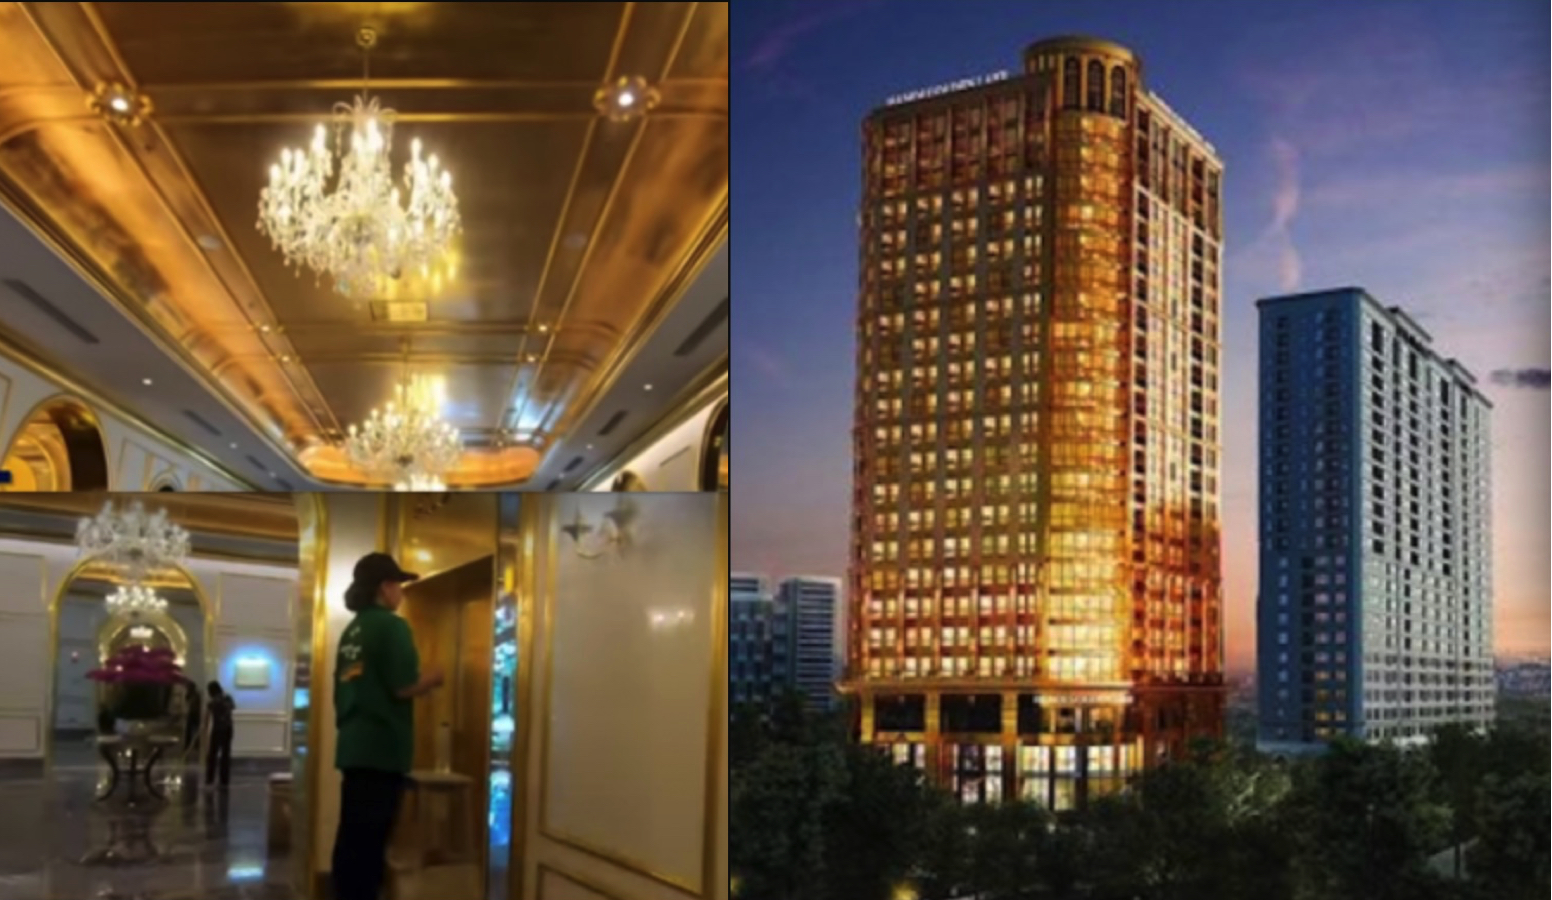 sajagempak.com - Hotel Bersalut Emas Pertama Di Dunia